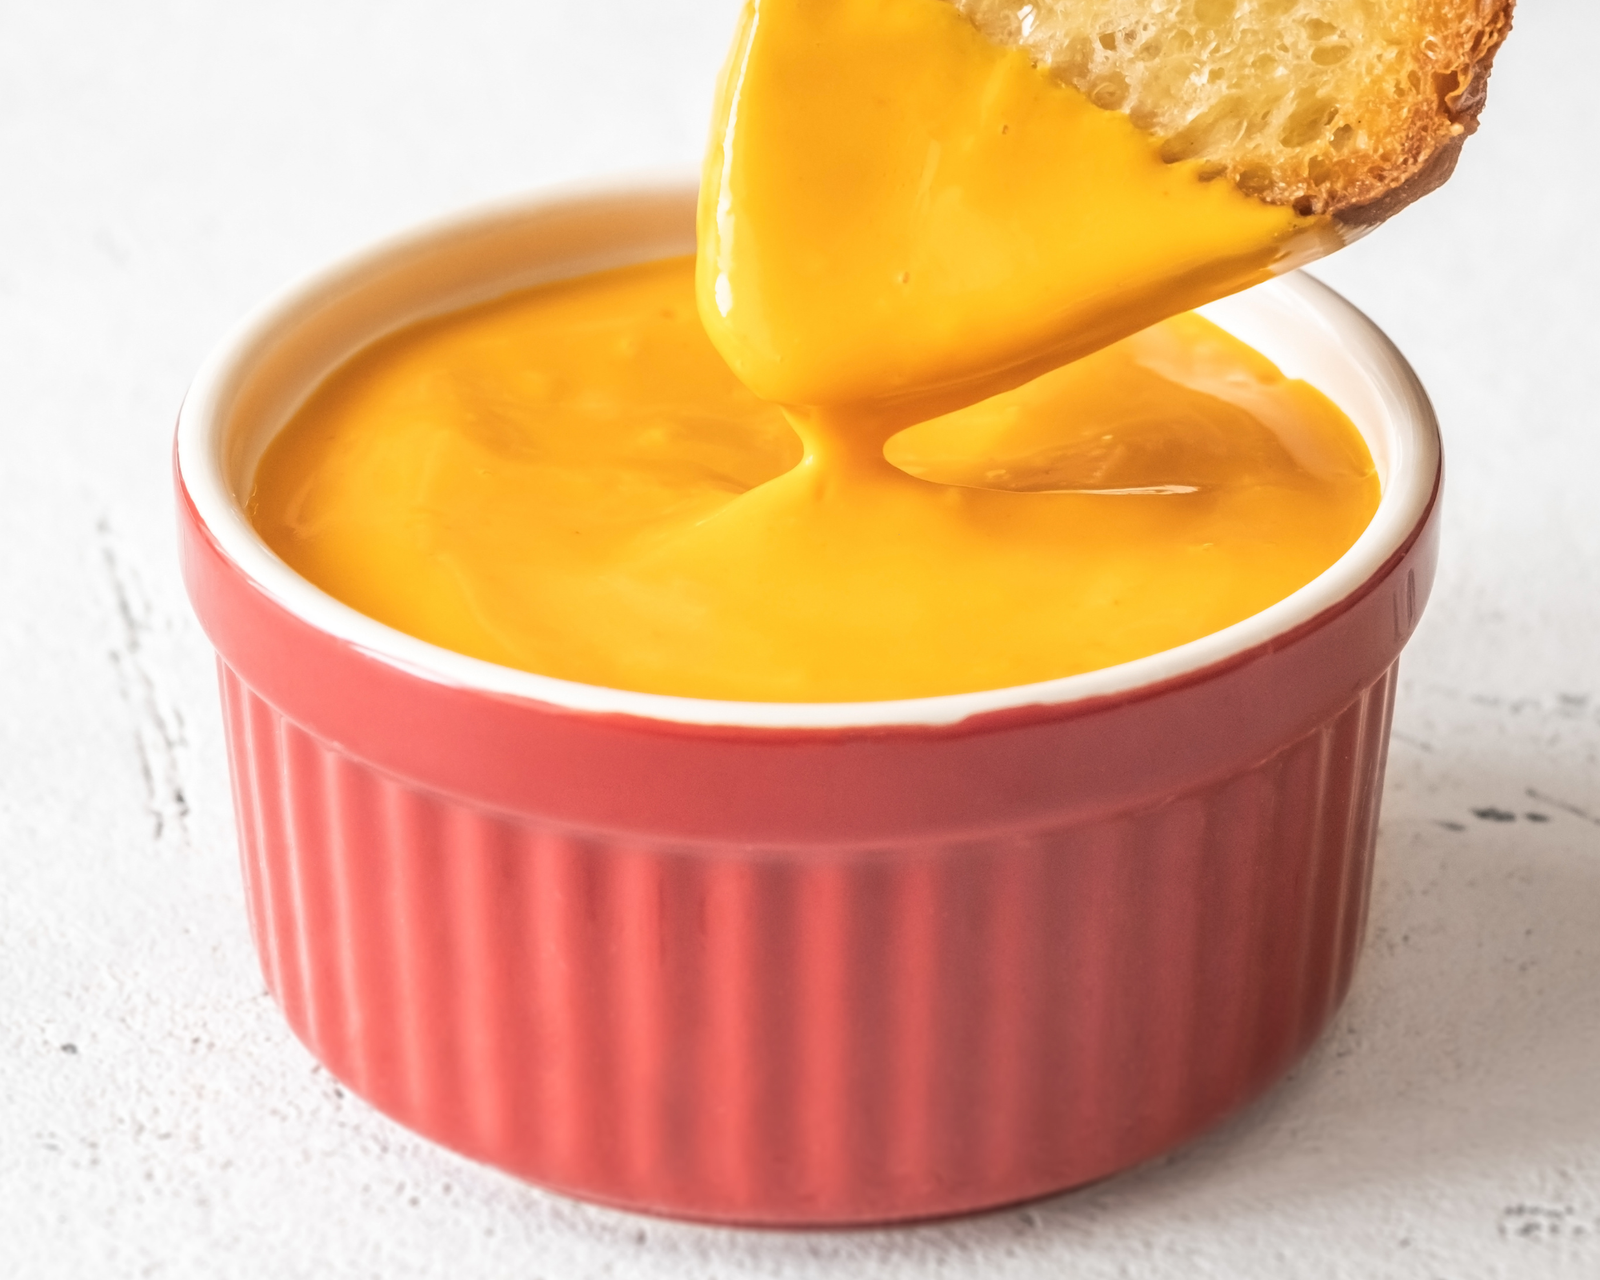 How Do I Create A Creamy And Lump-free Cheese Sauce?